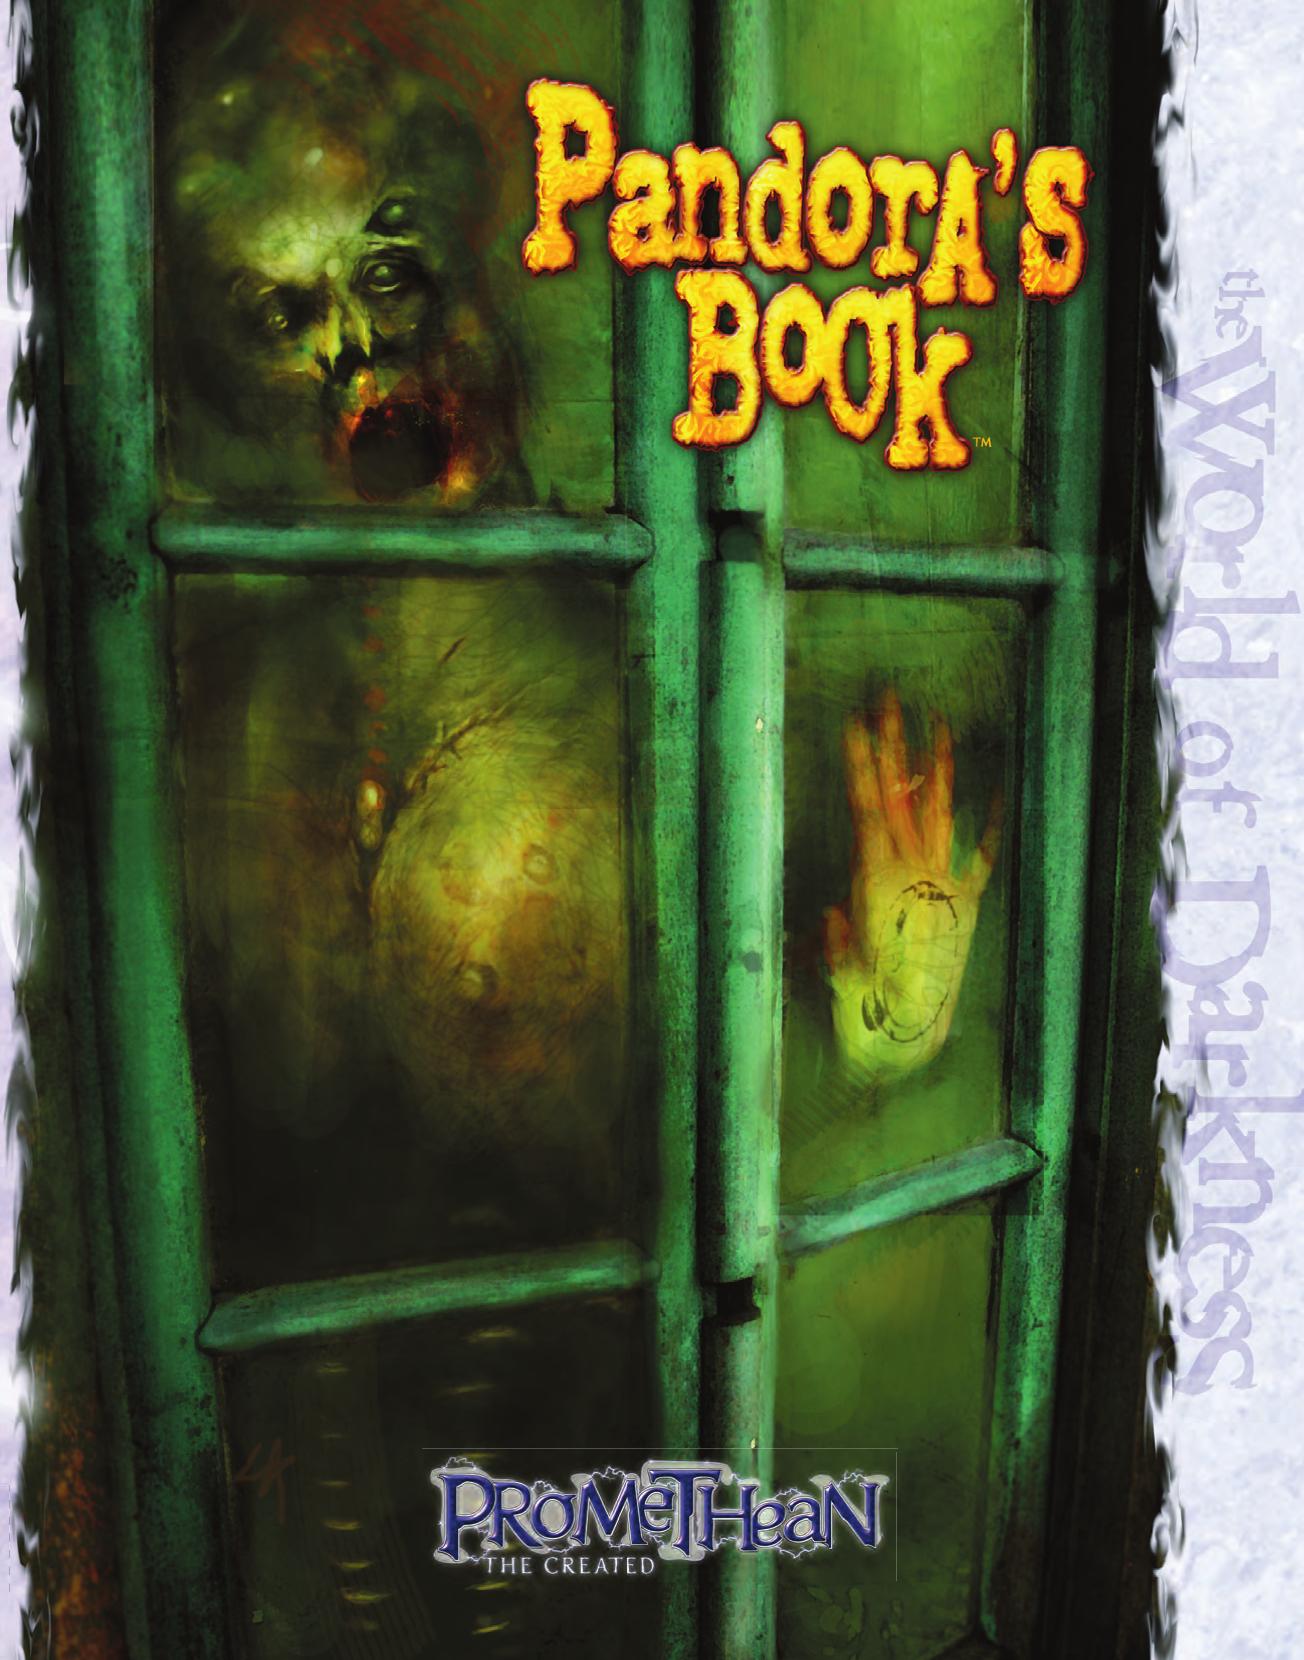 Pandoras Book